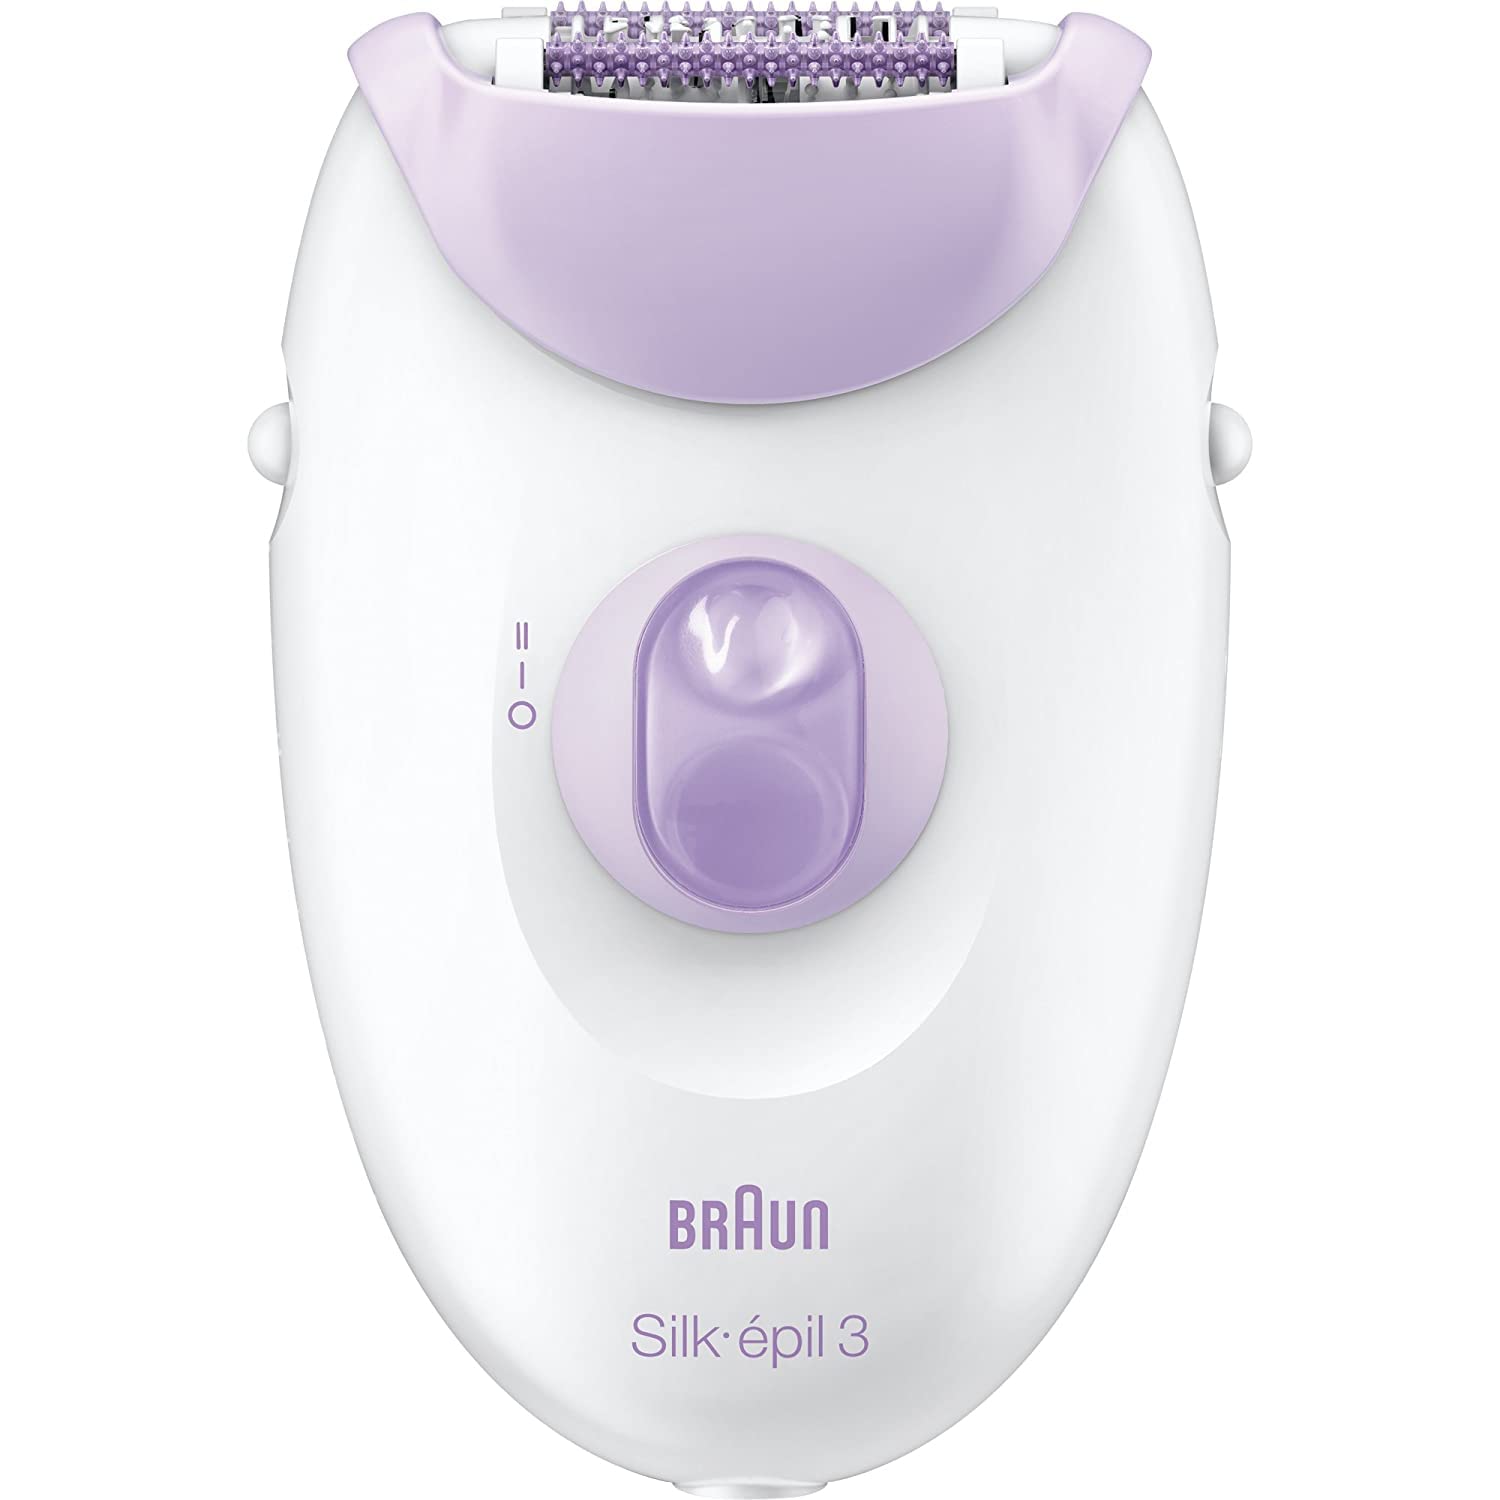 Braun Silk-épil 3 3-170 - Electric Hair Removal Epilator for Women